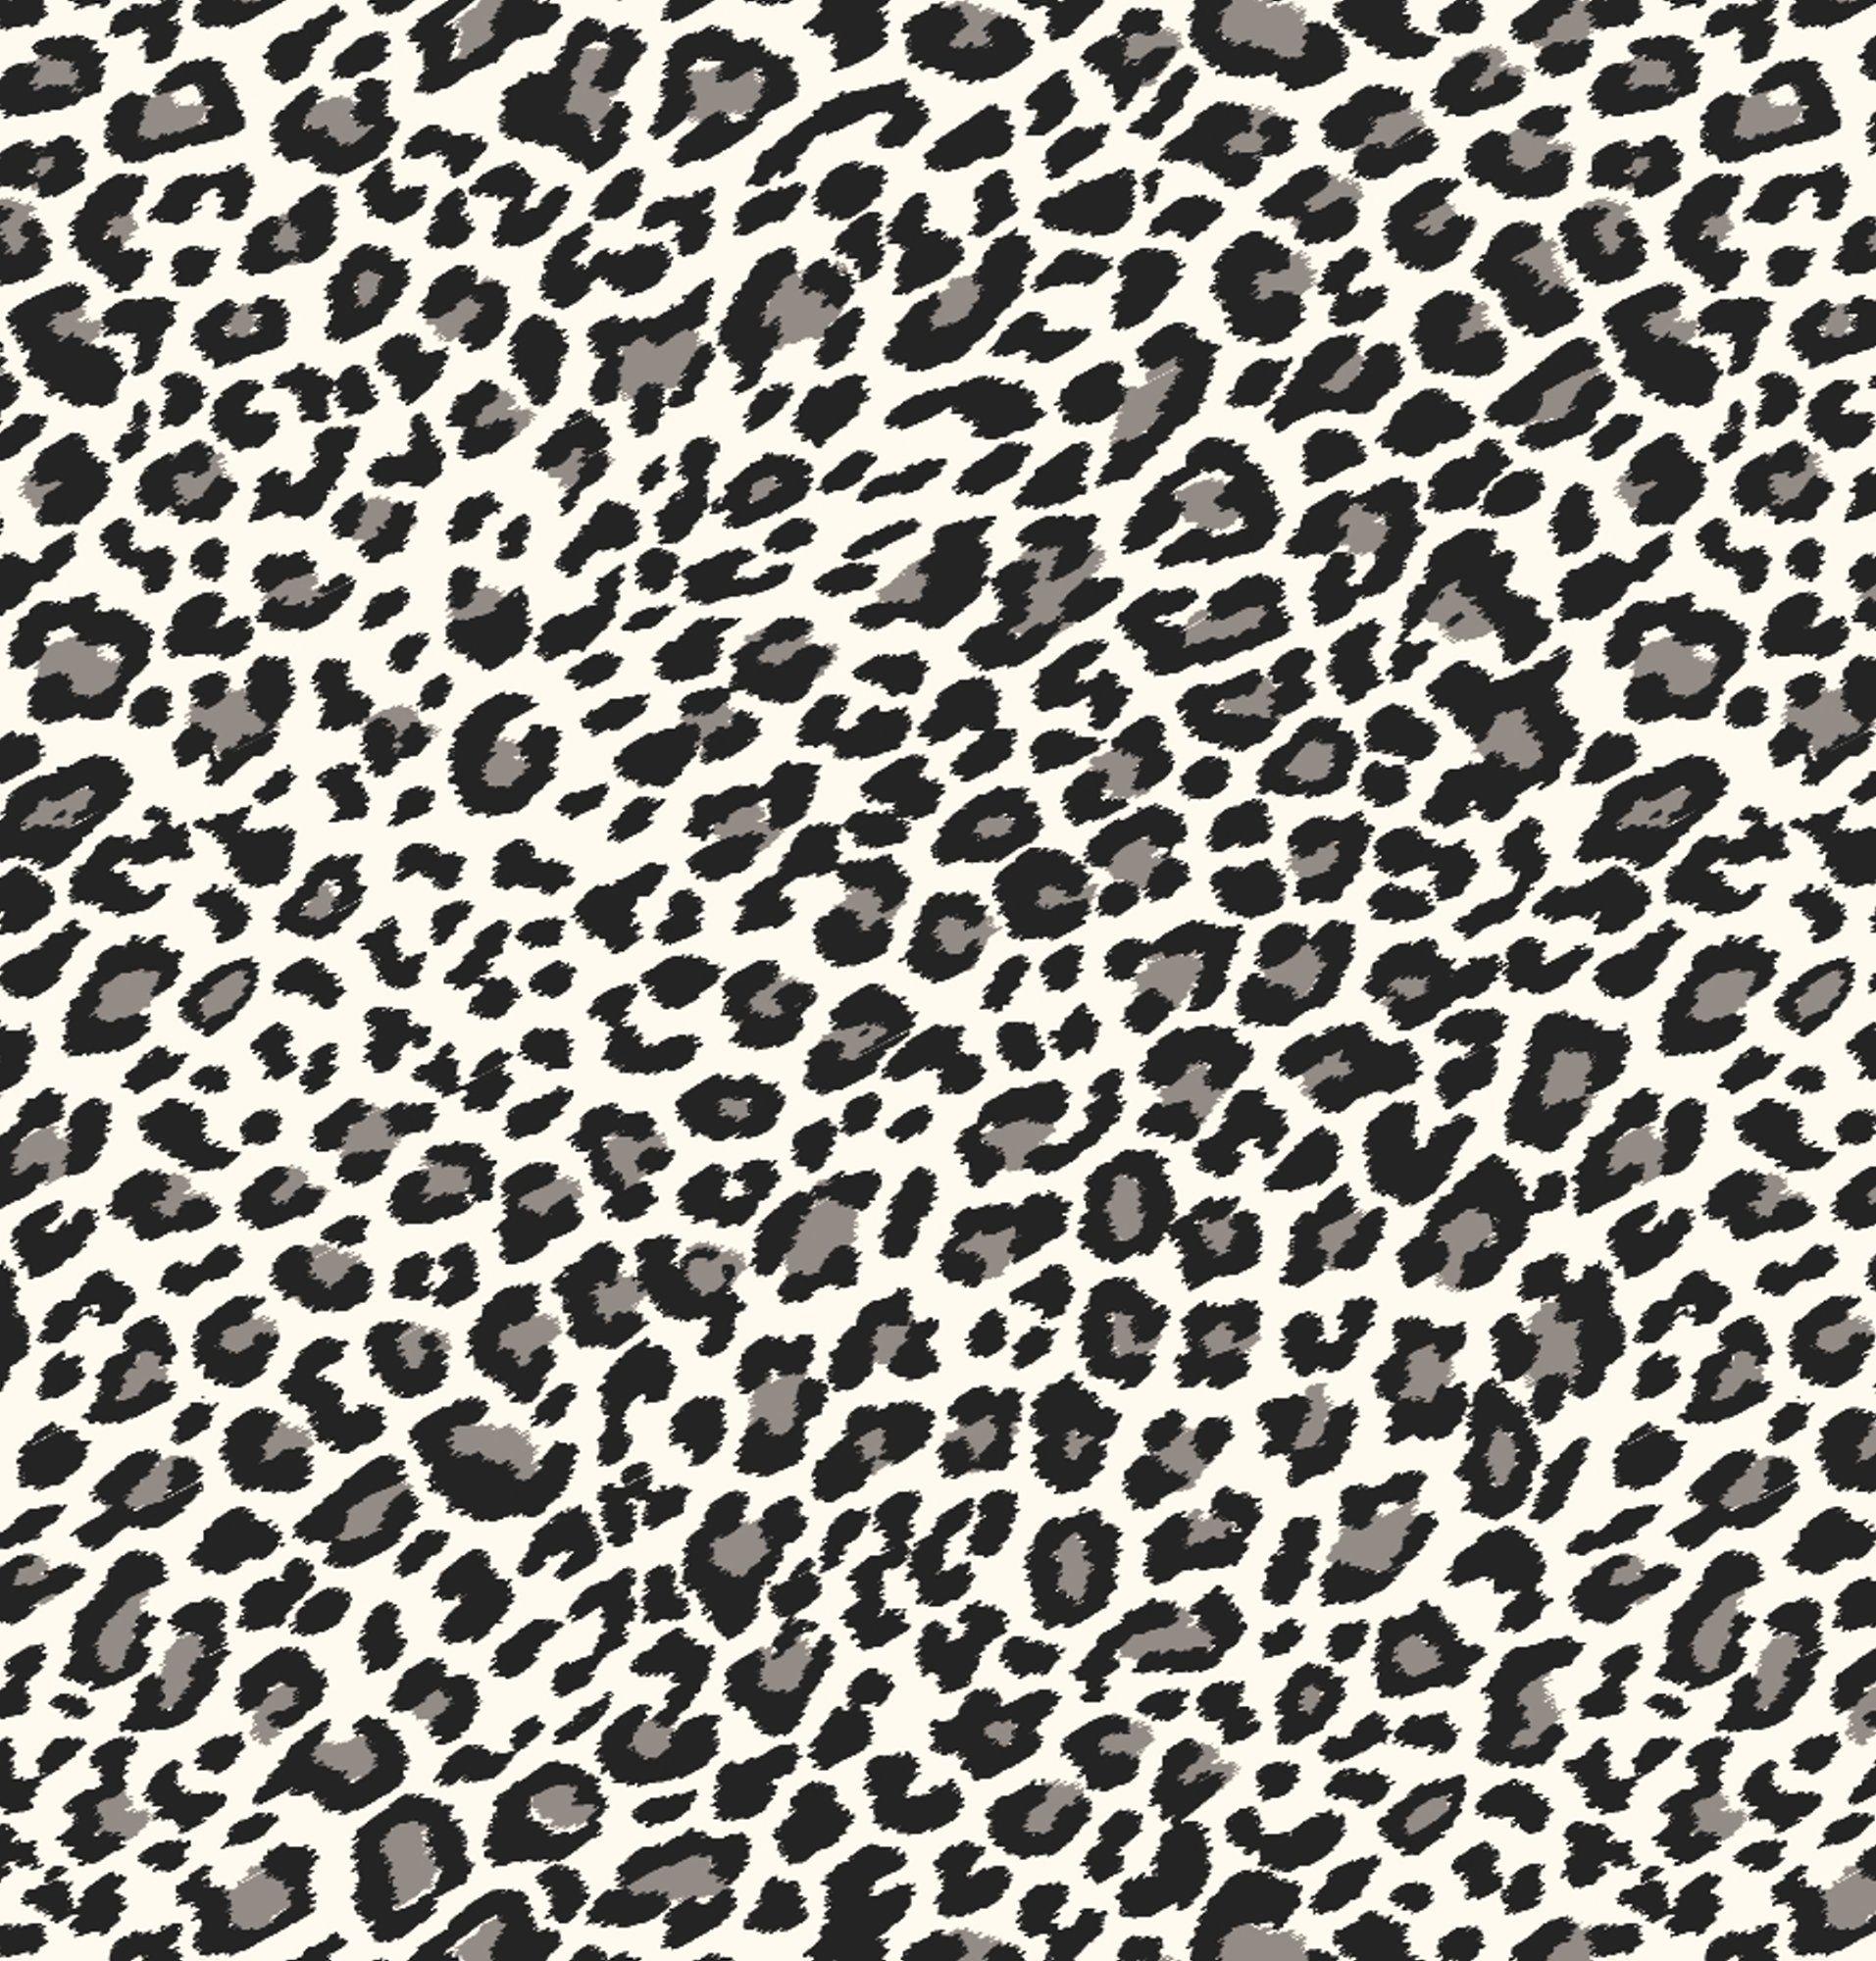 Black and white cheetah wallpaper